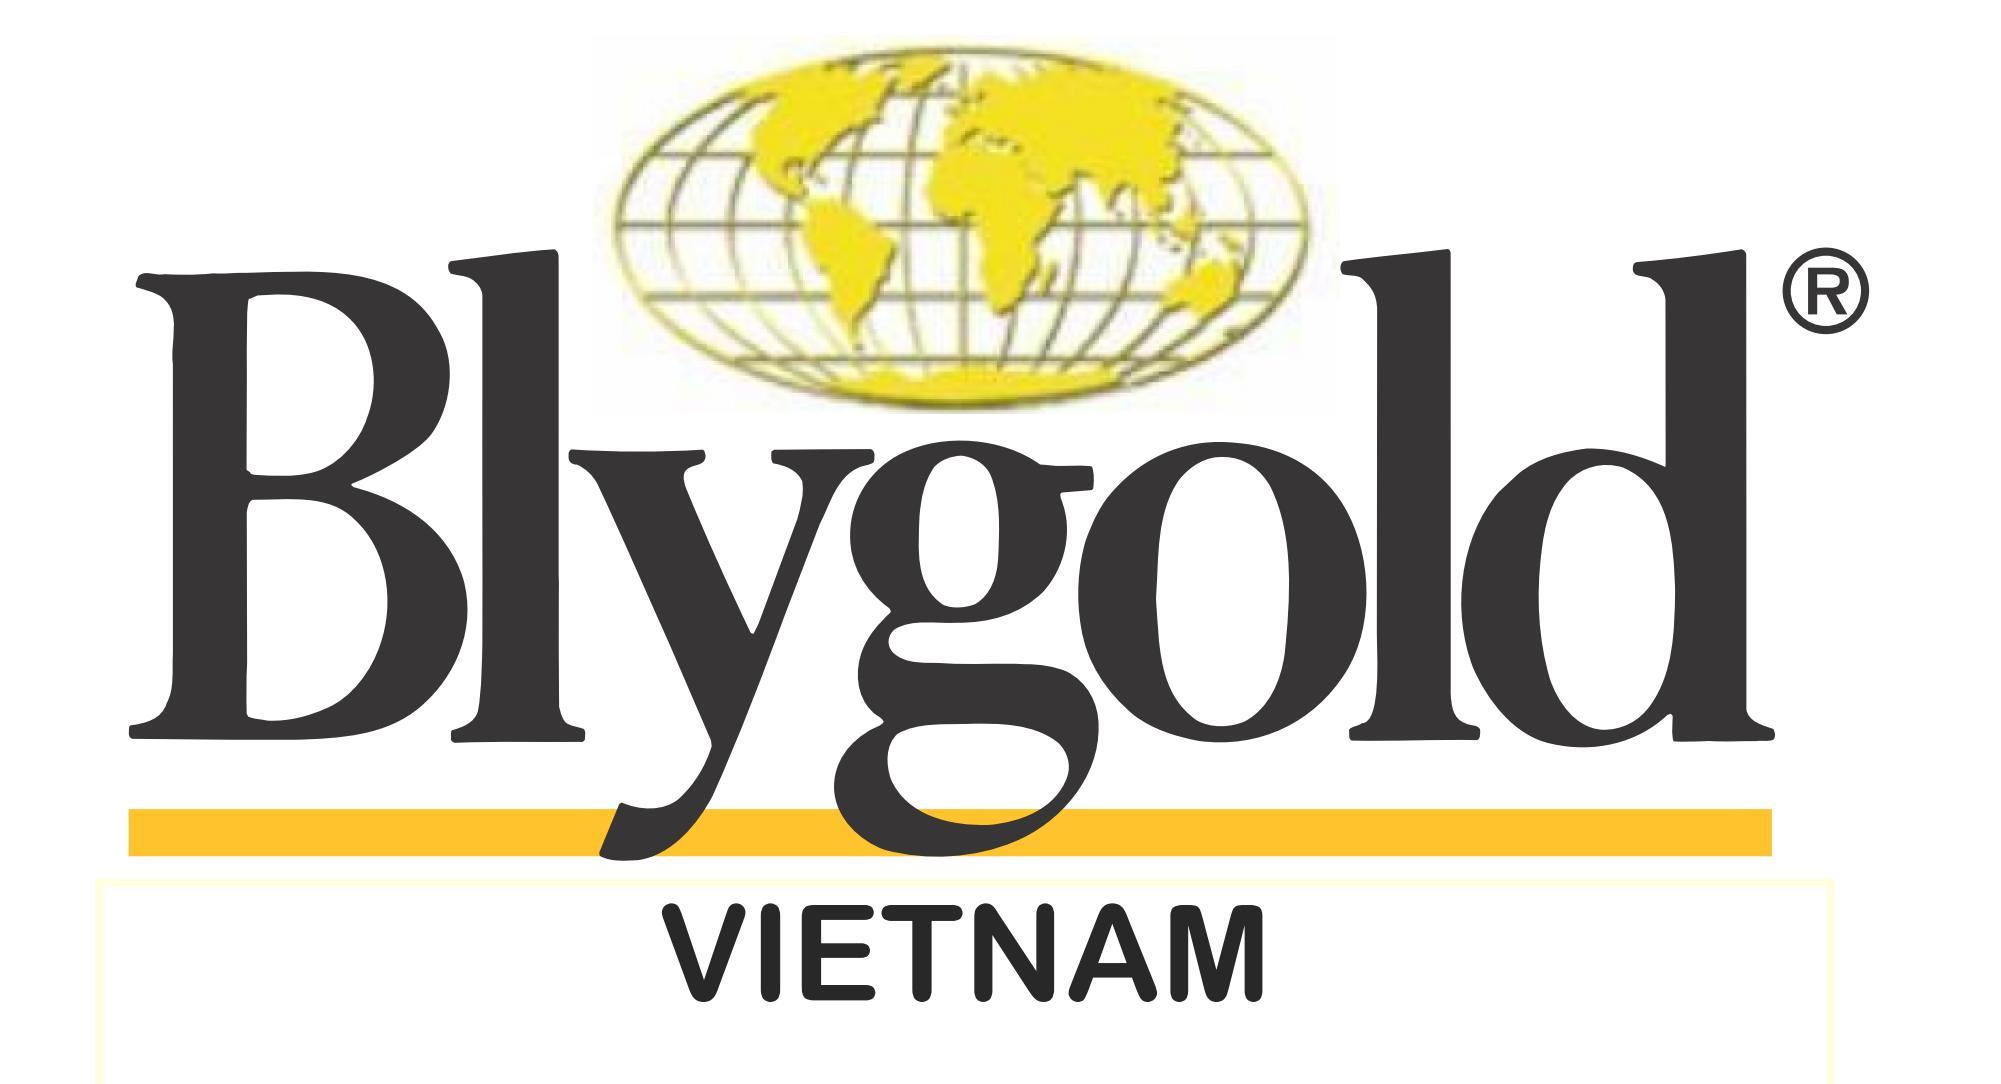 Blygold Vietnam